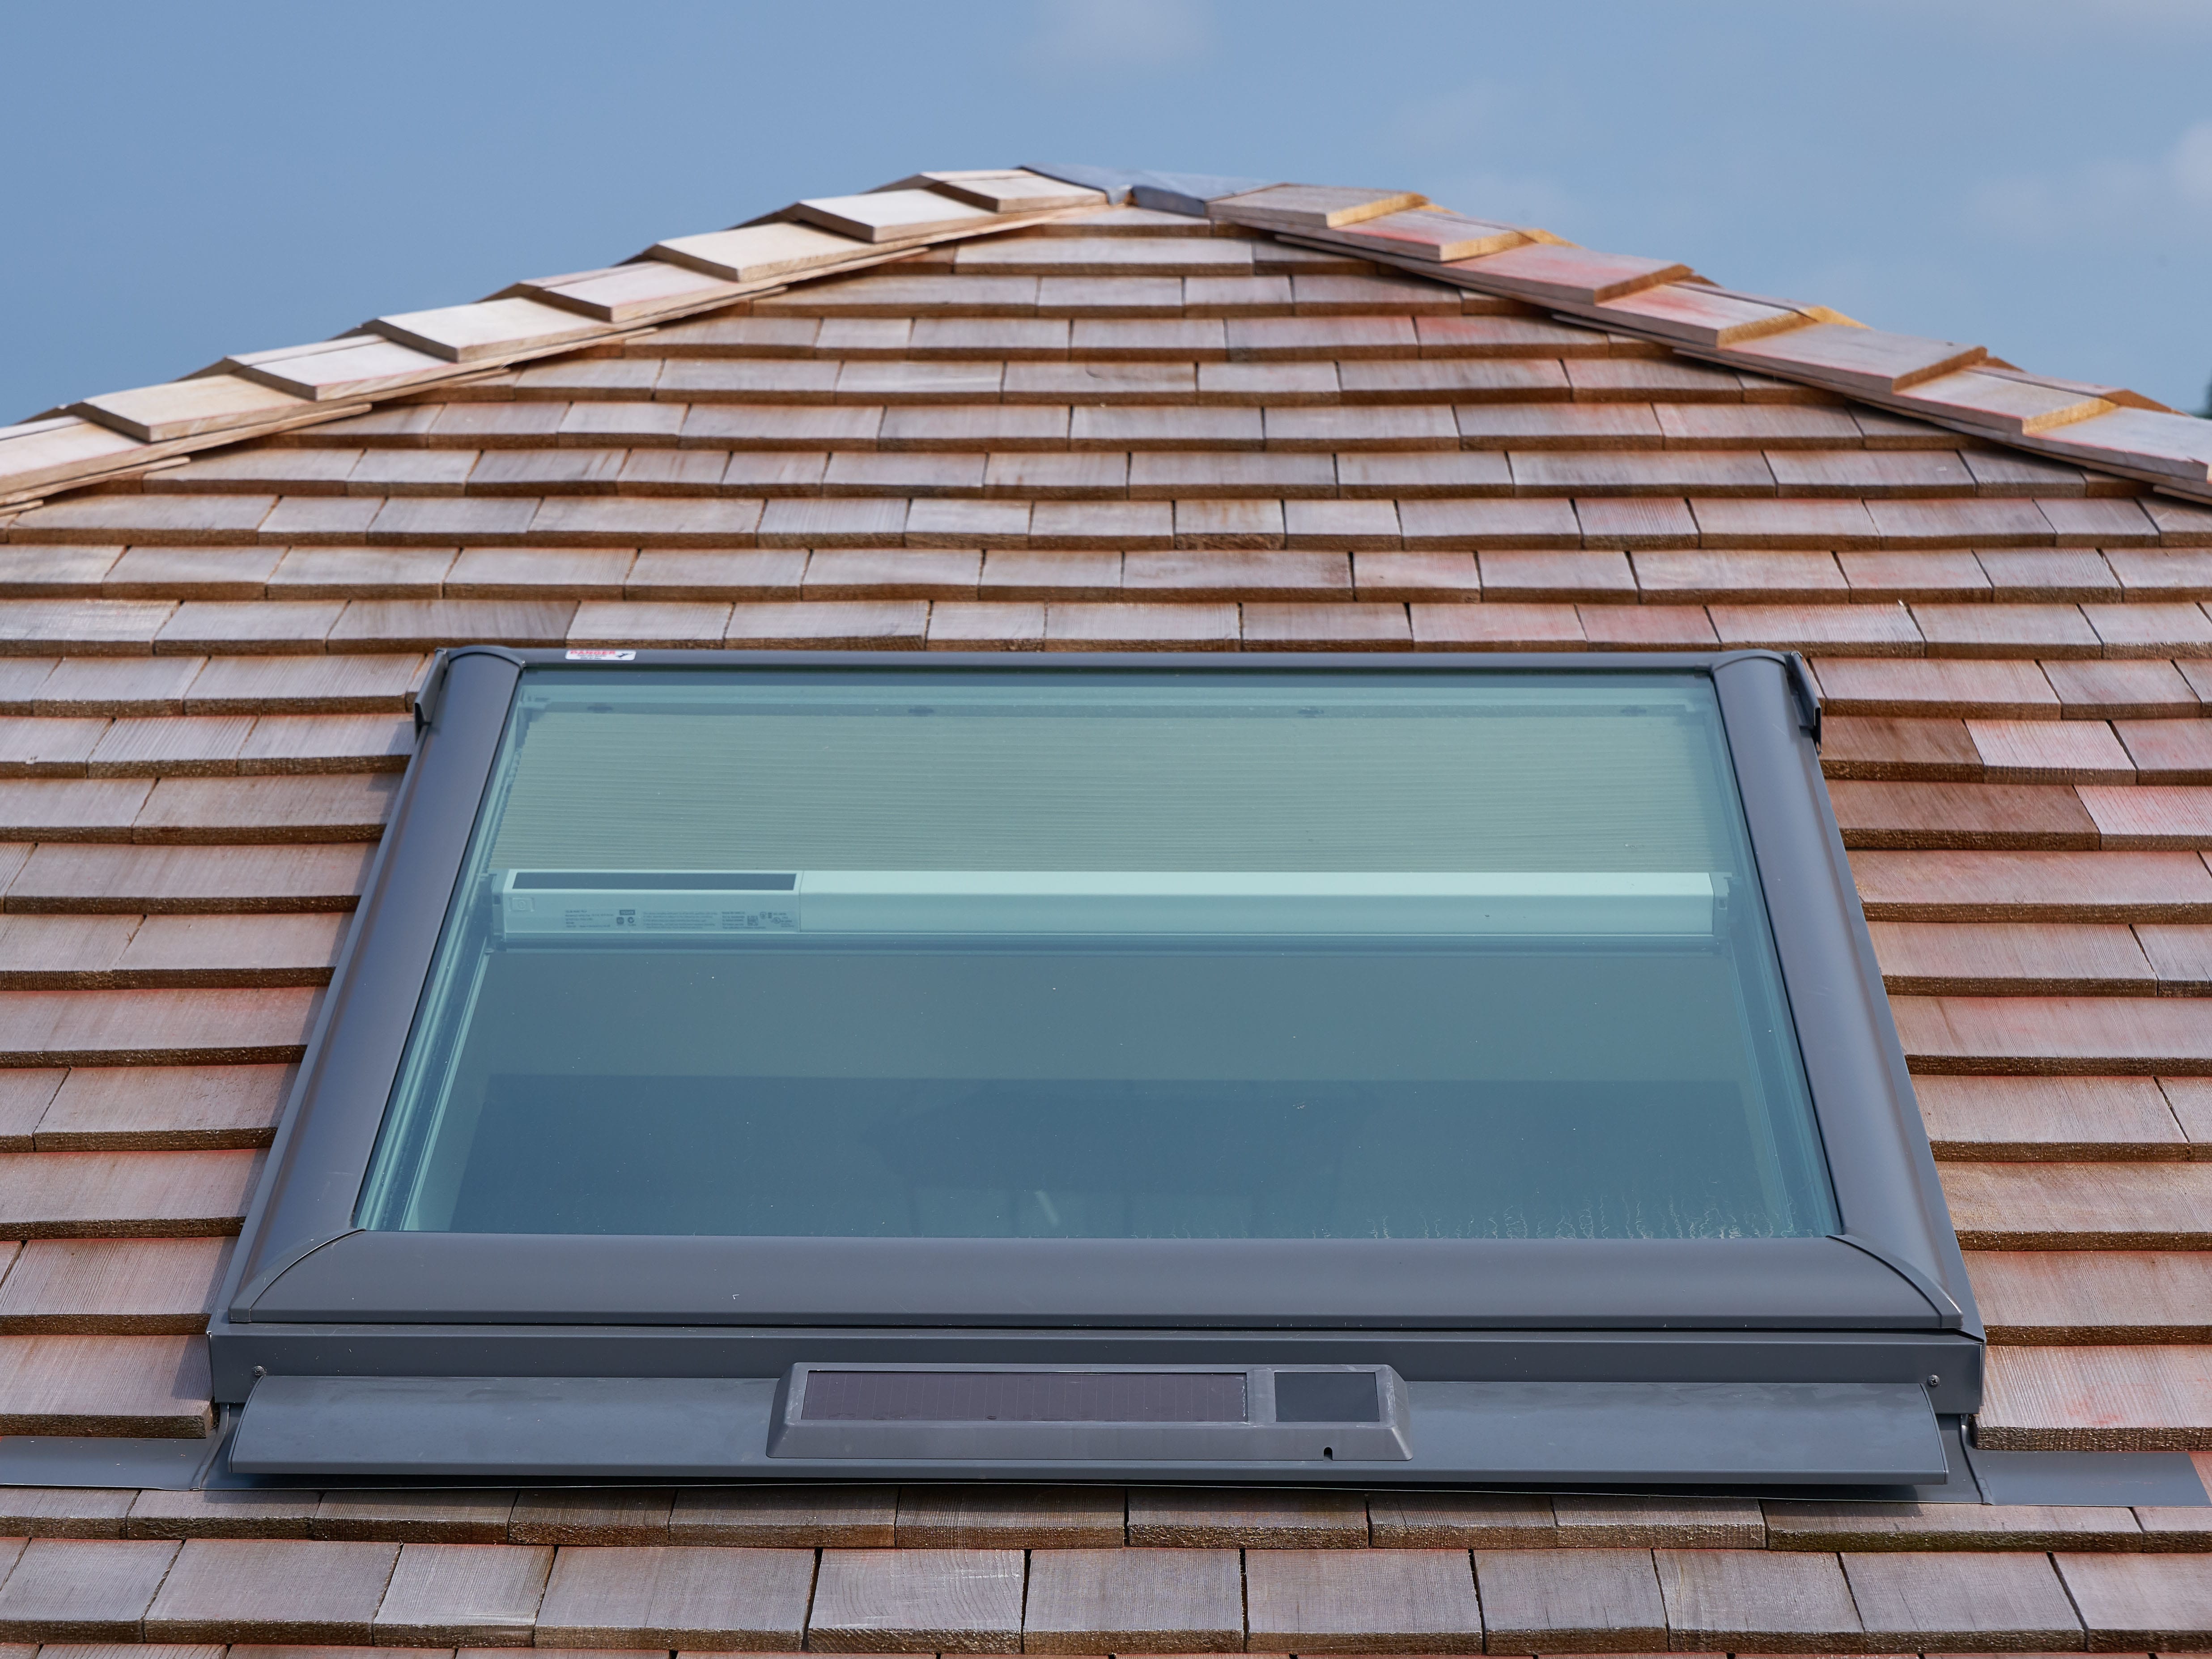 Exterior-close-skylight-closeup-shake-roof.jpg#asset:6032